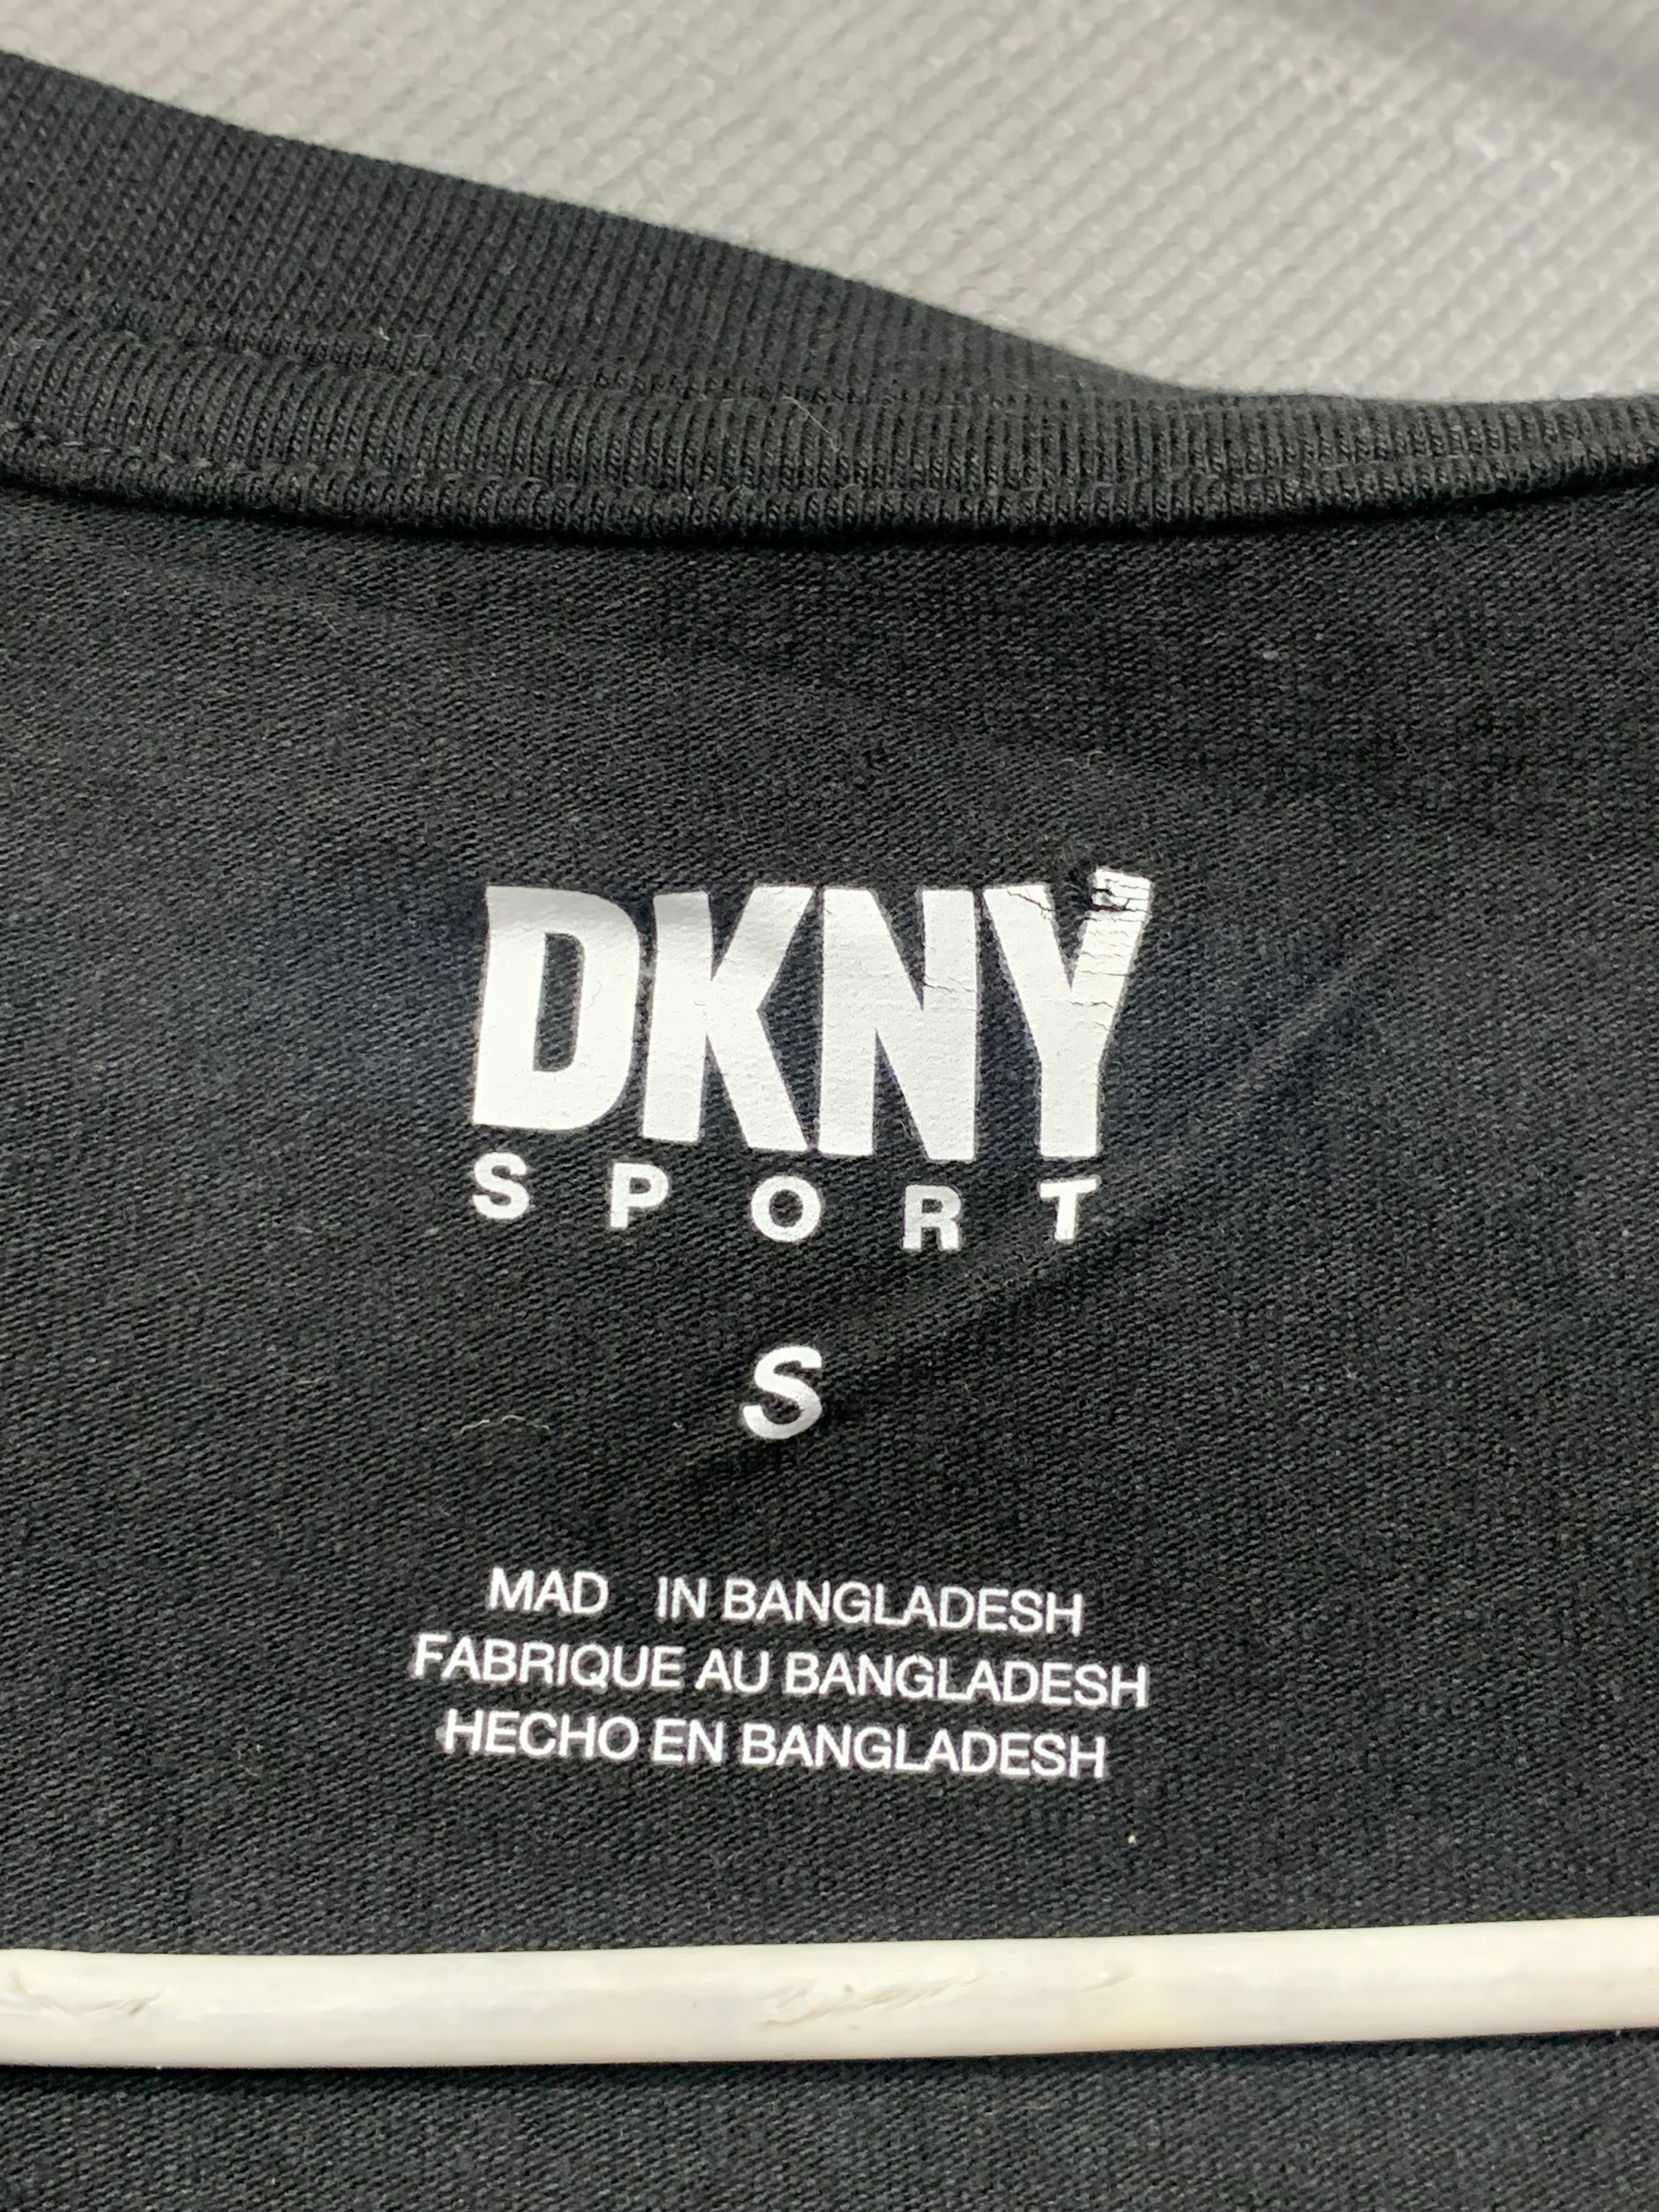 DKNY Sport Branded Original Cotton T Shirt For Men